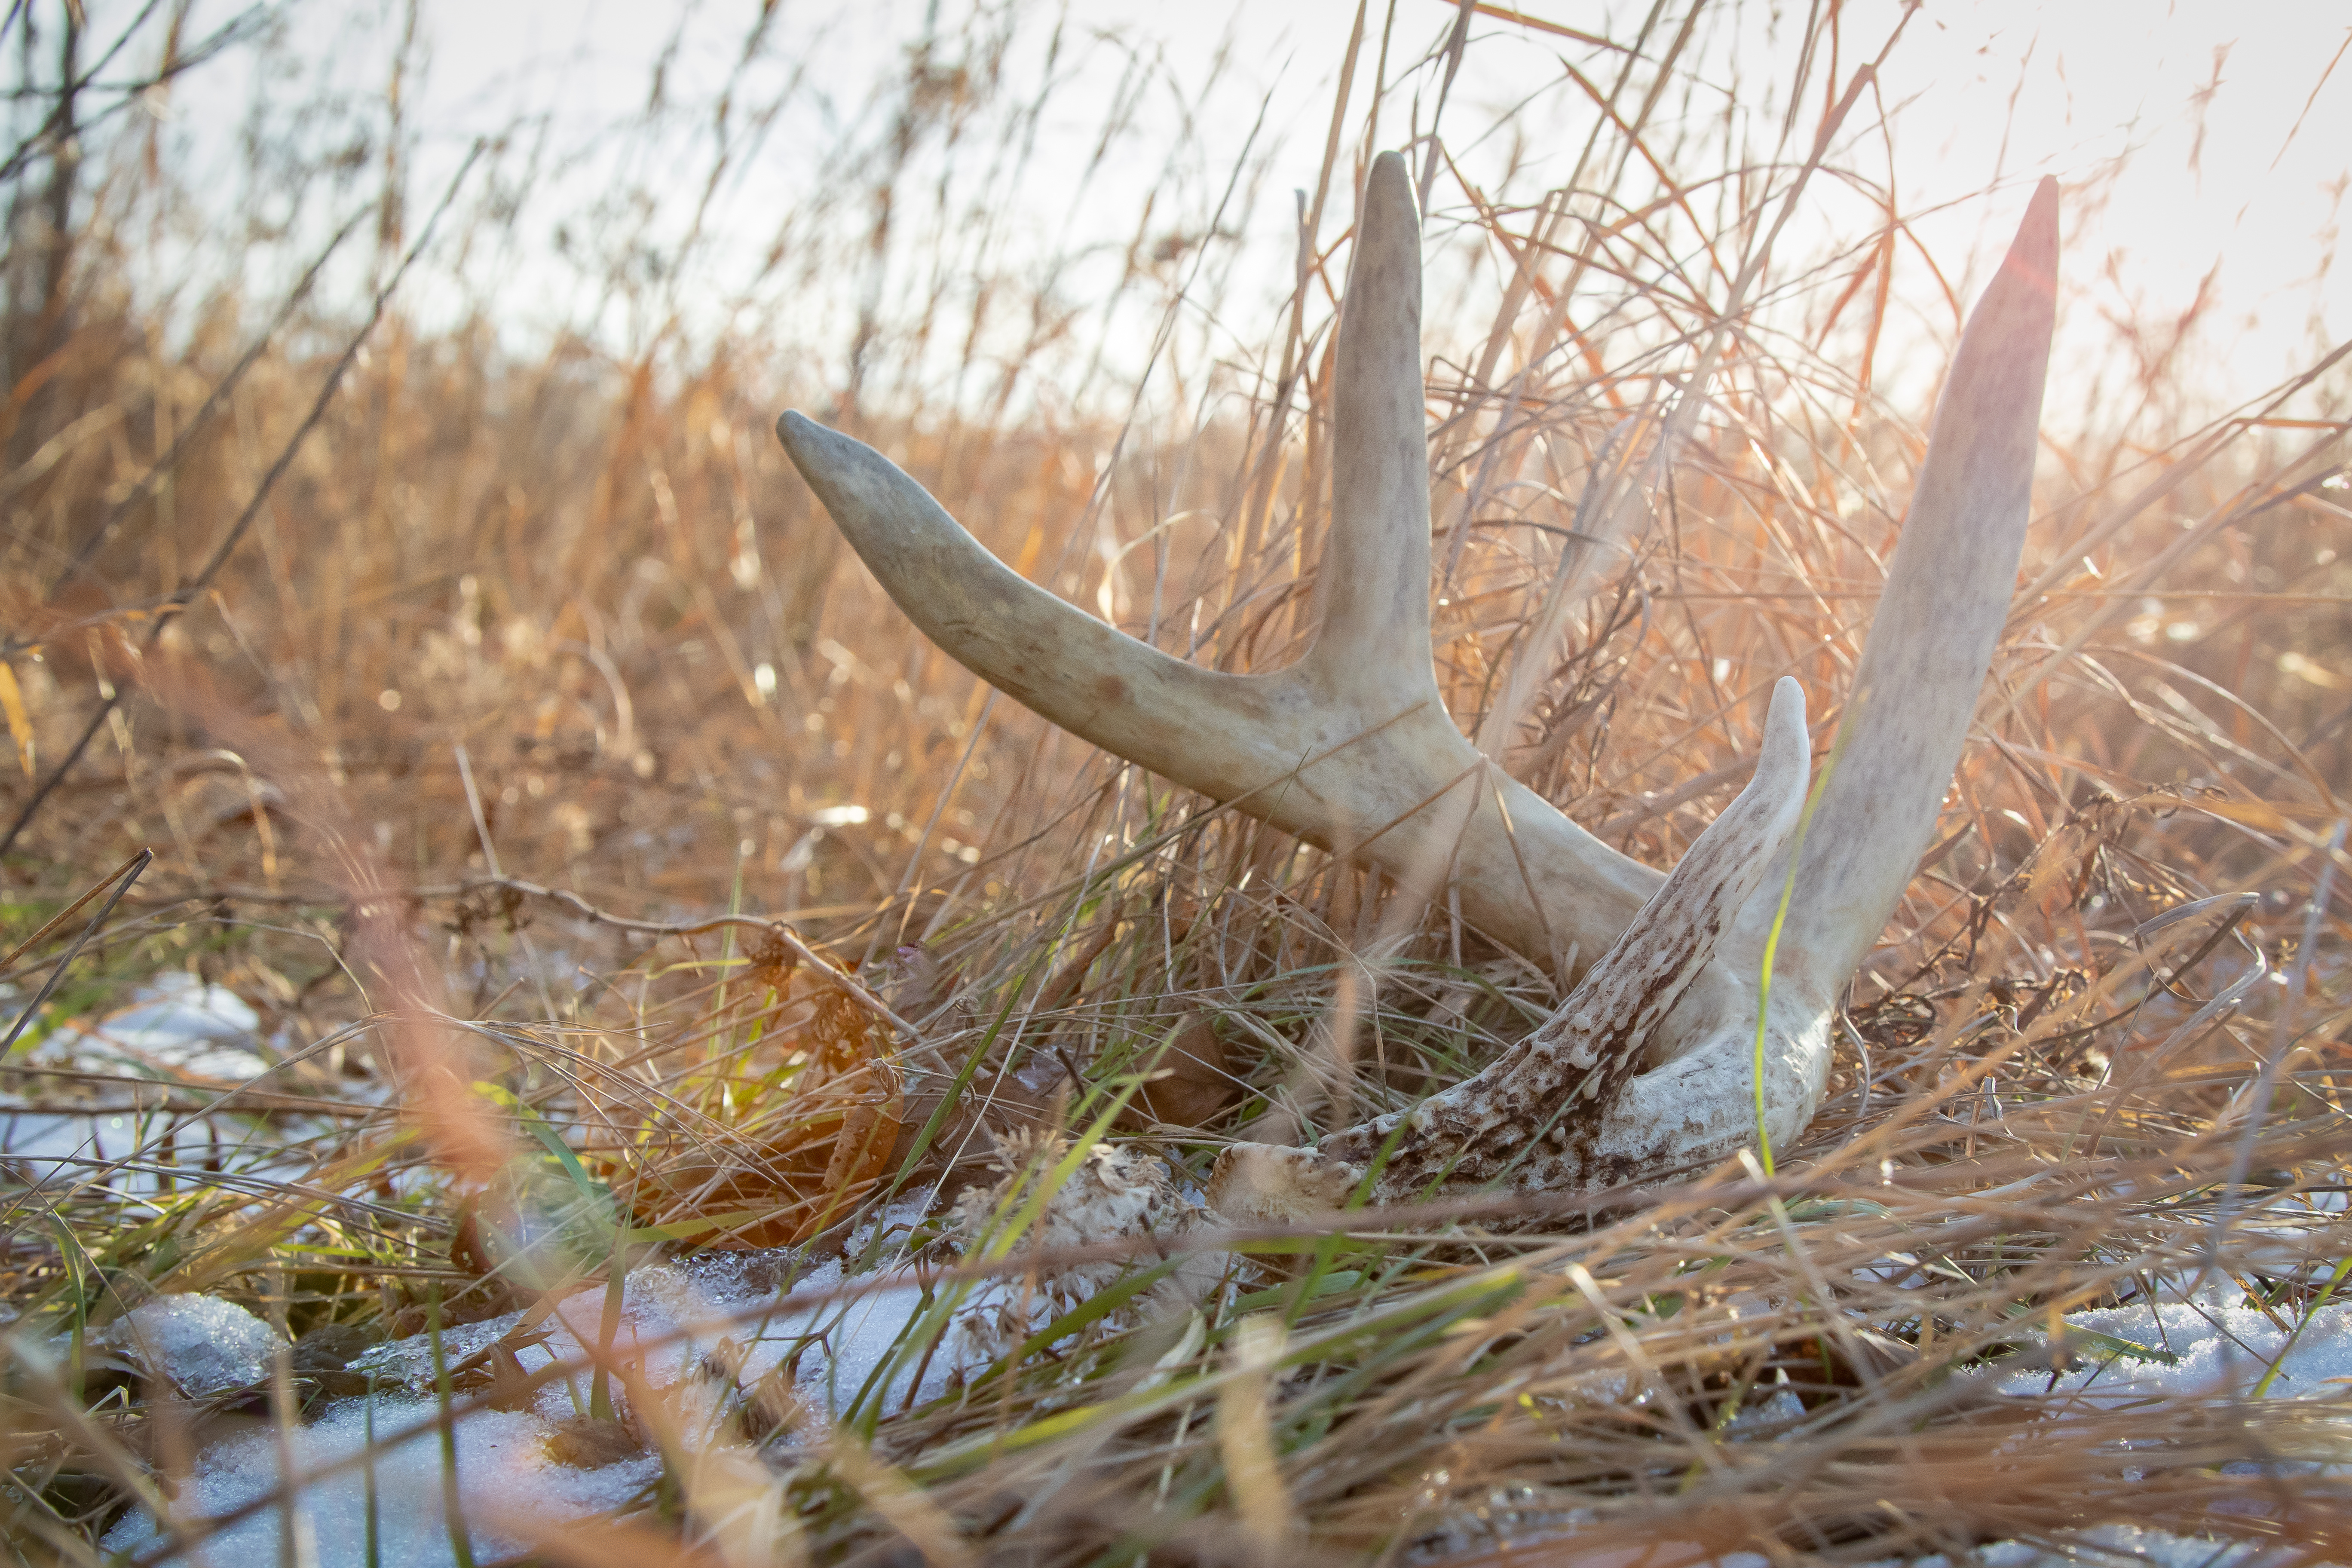 Deer Antler Rack -White Tail, 3 point